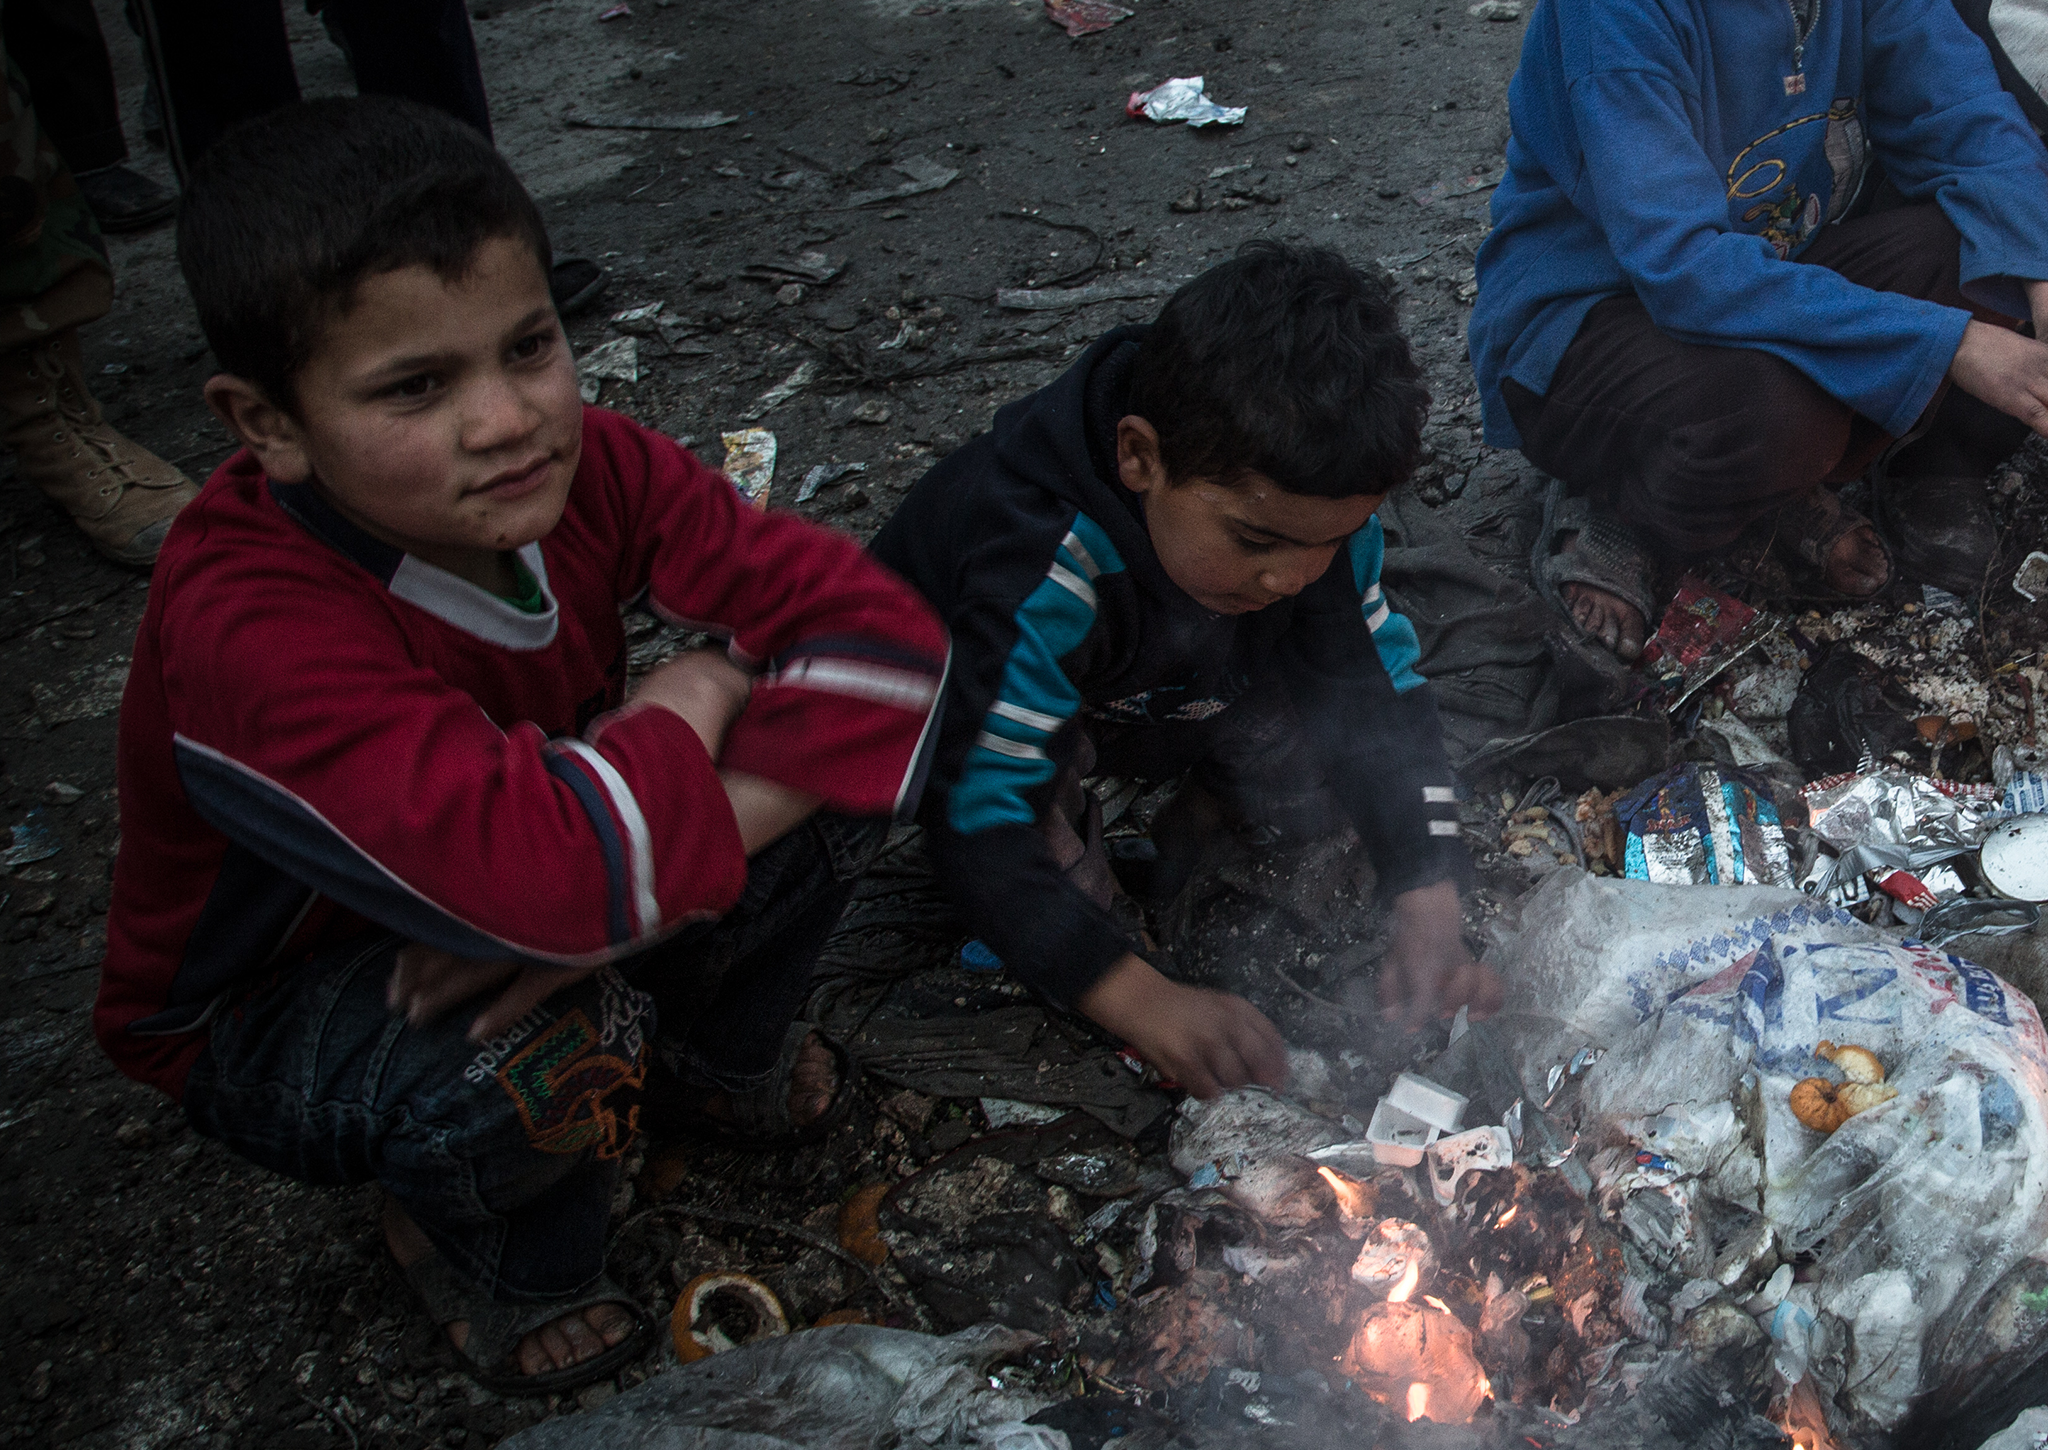 Syrian children try to keep warm in the Bab Al Hawa refugee camp near the Syria-Turkey border (Credit: Chris Huby)